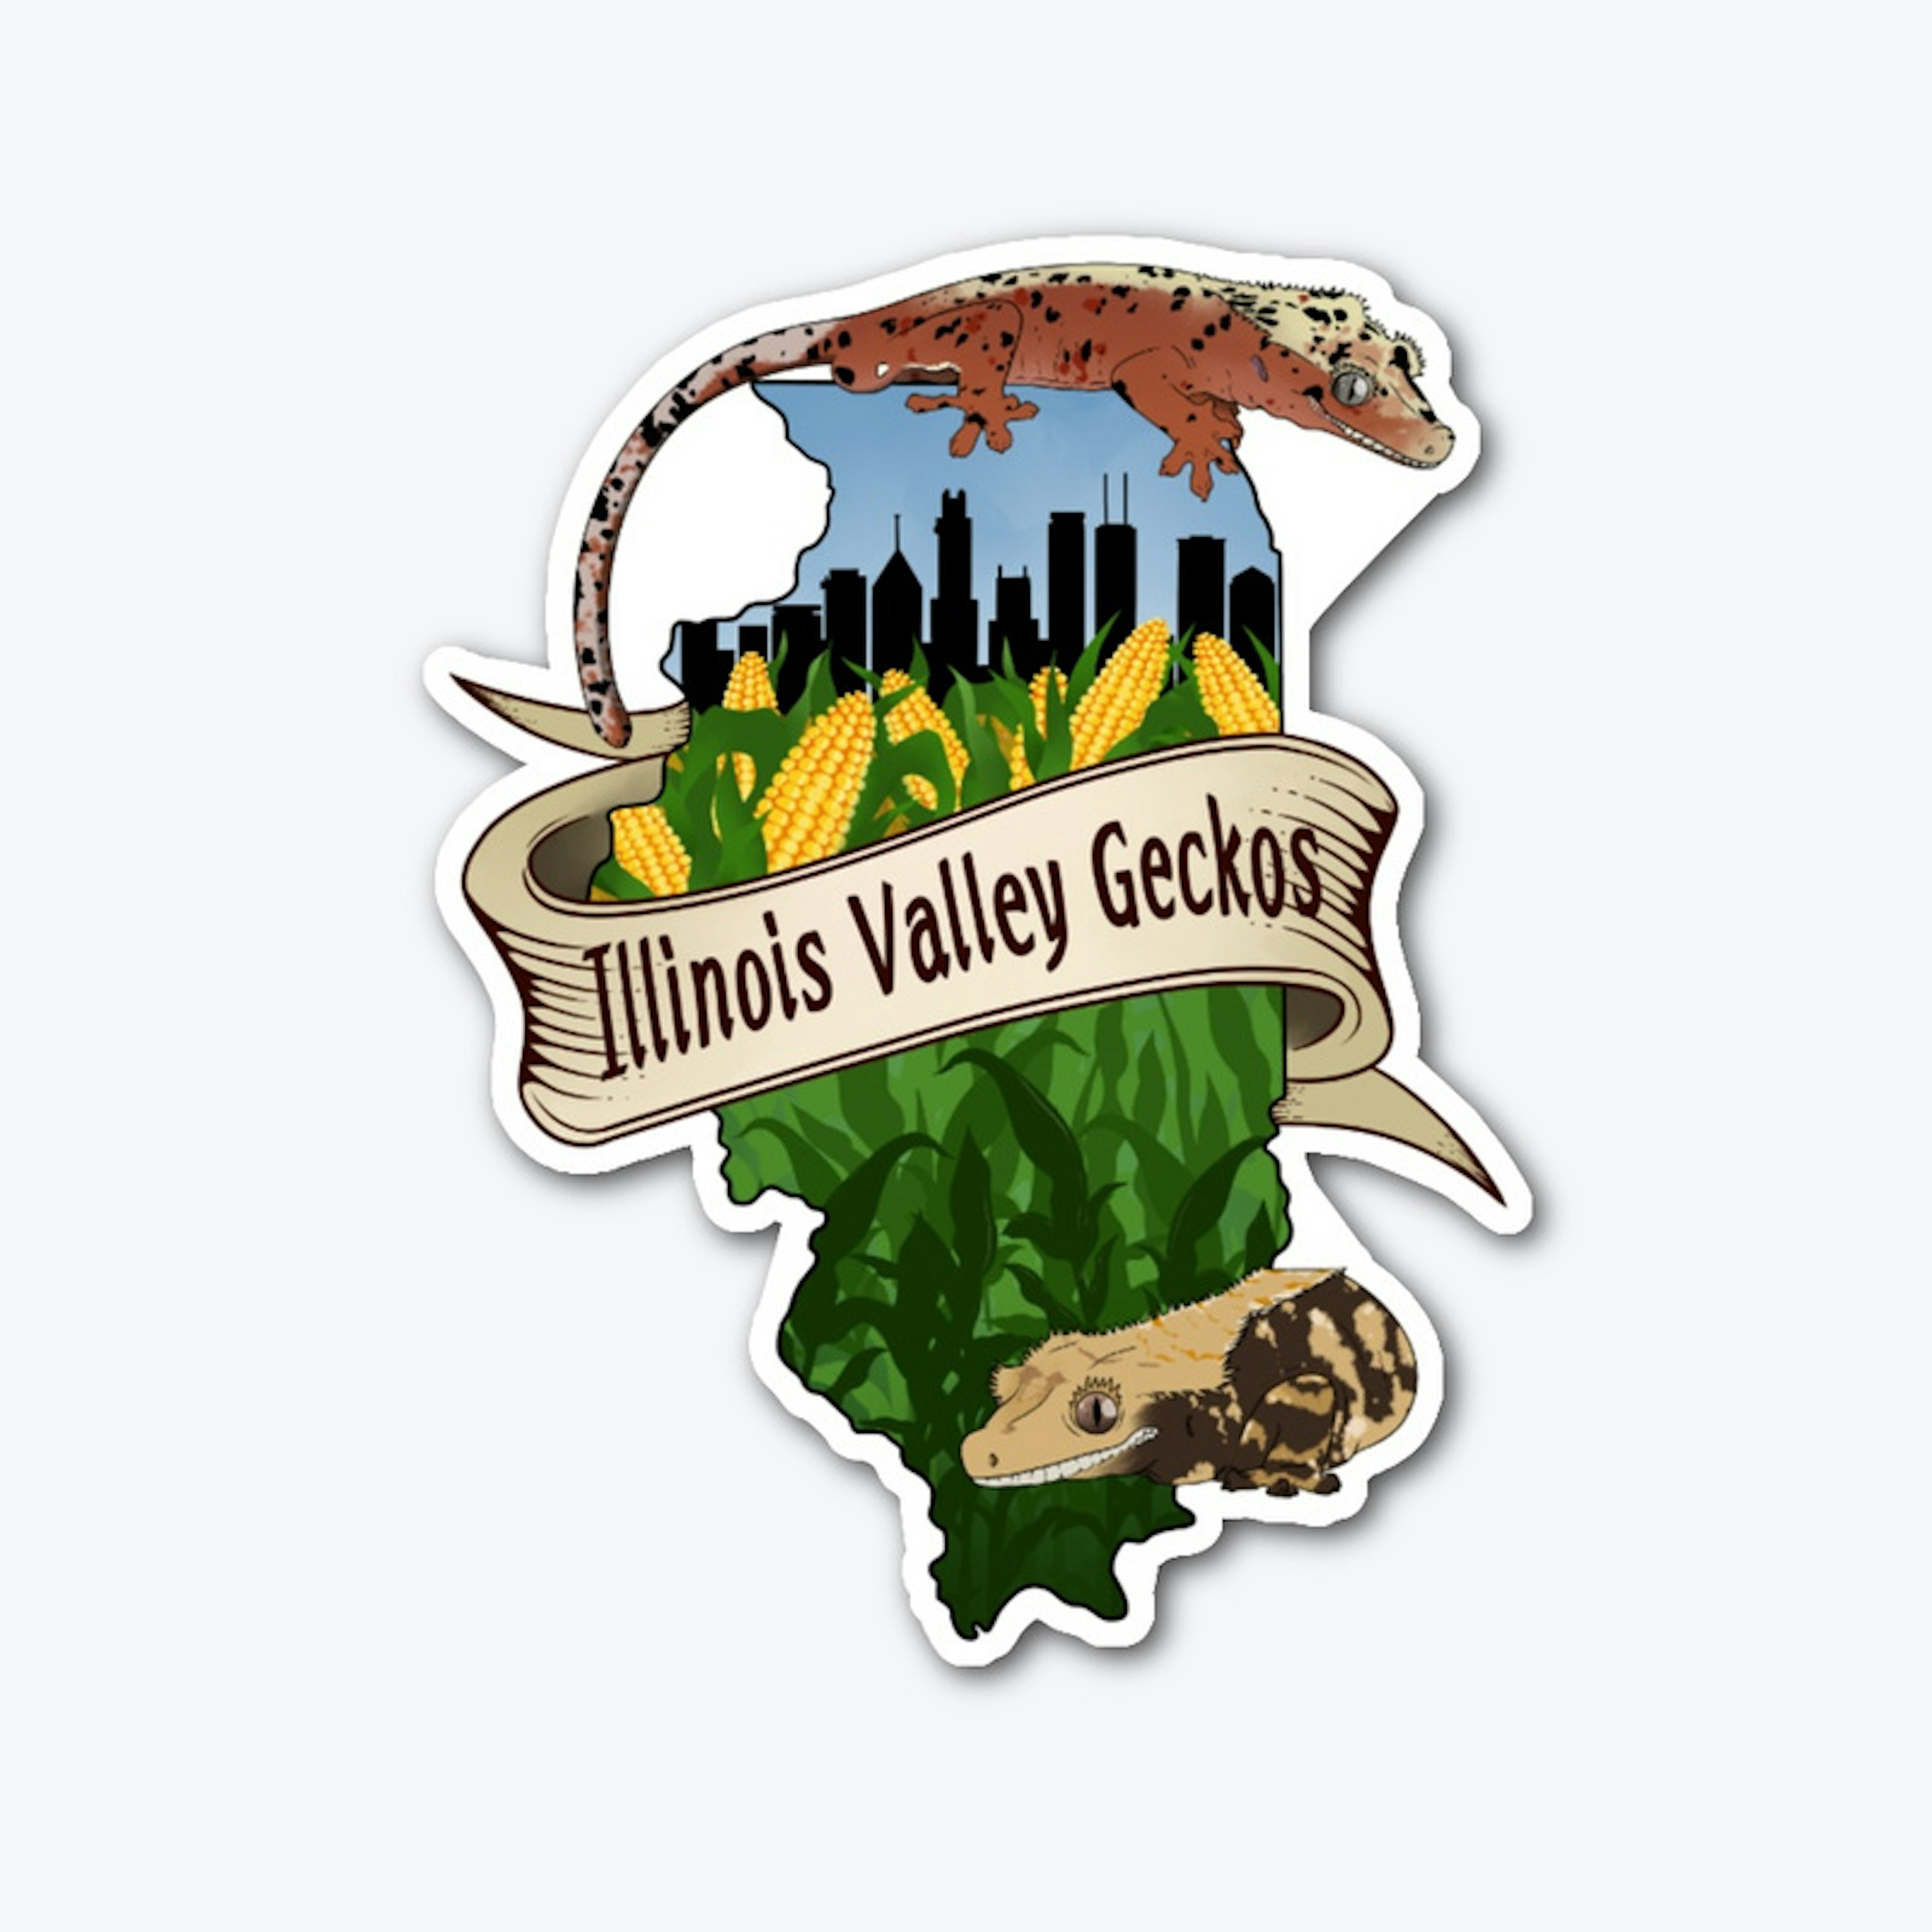 Illinois Valley Geckos